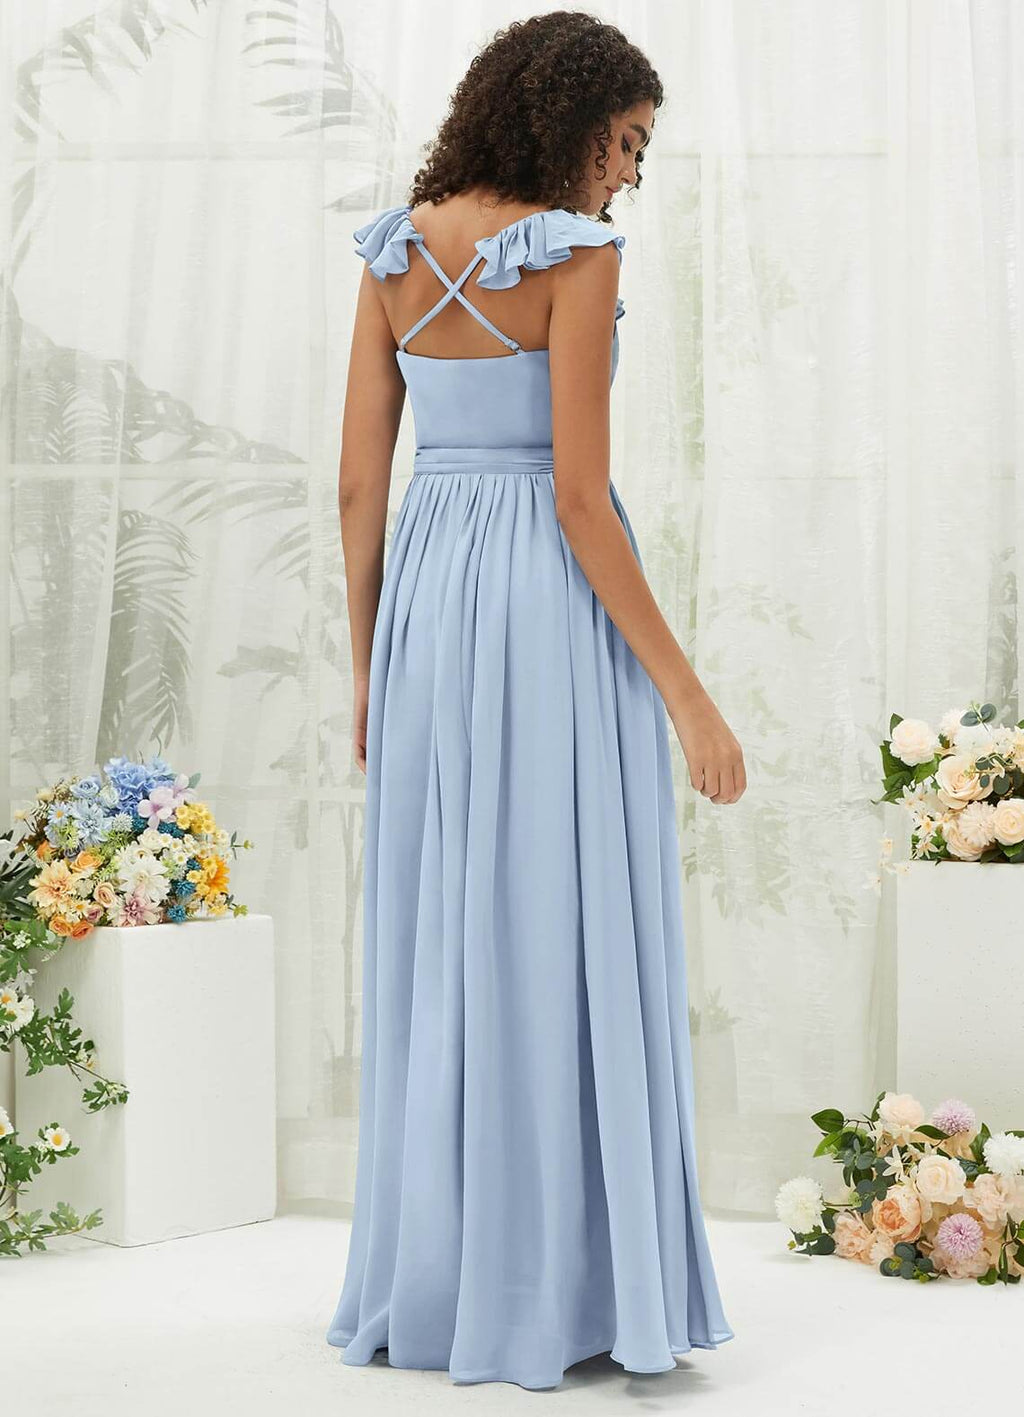  NZ Bridal Cornflower Blue Ruffle V Neck Chiffon Bridesmaid Dress R3702 Valerie a